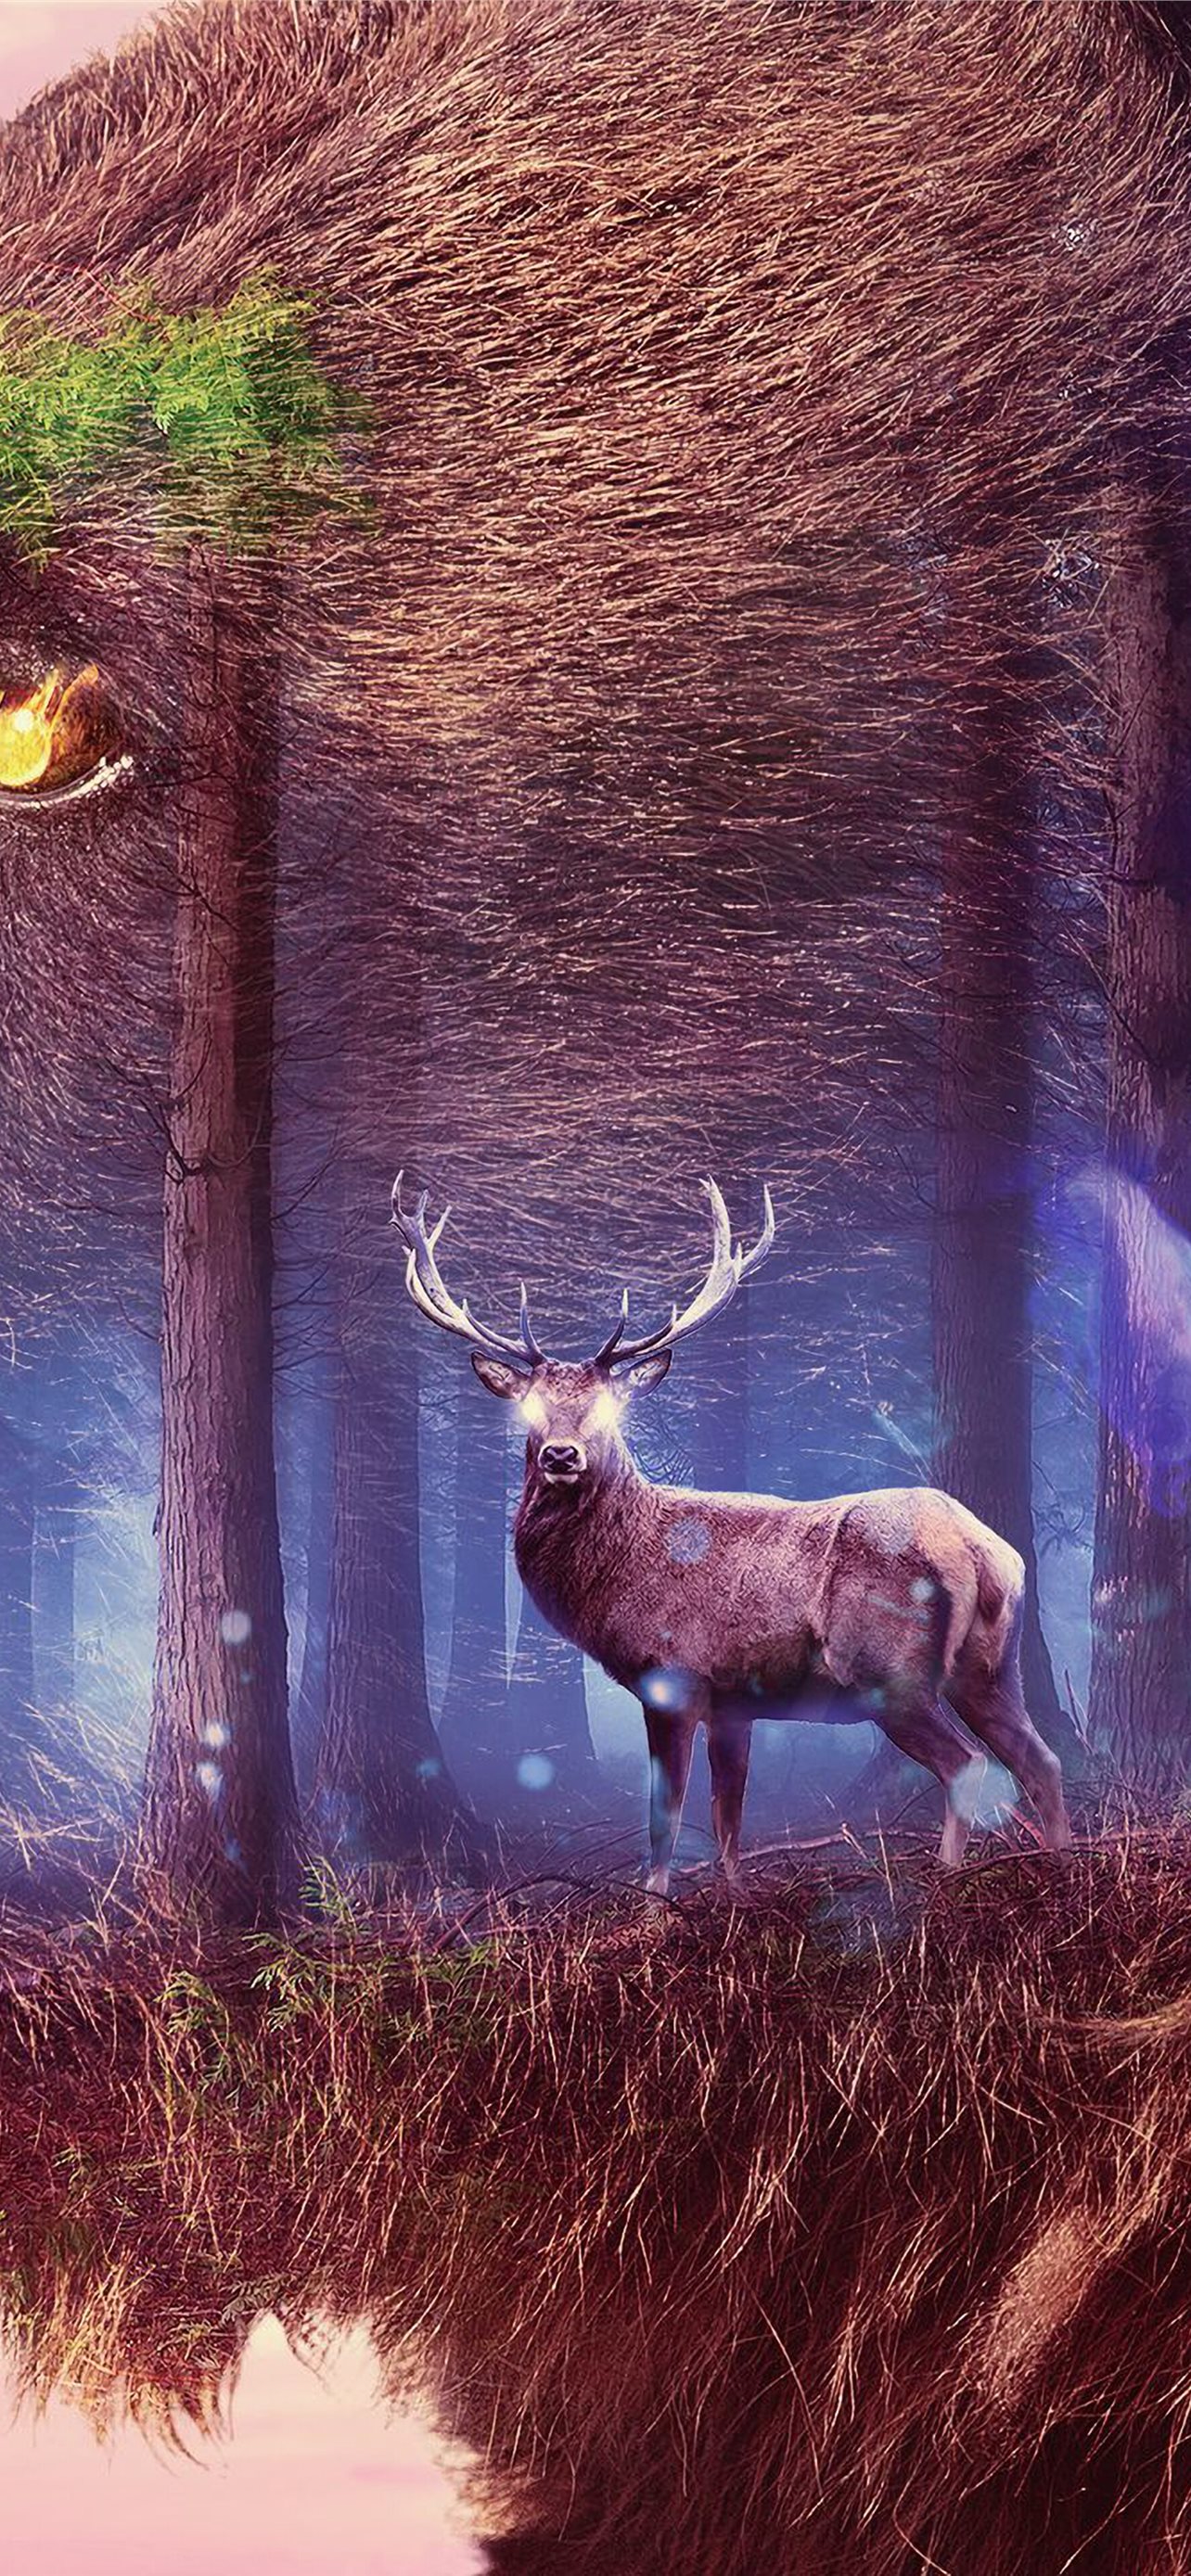 Wallpaper ID 300391  Animal Elk Phone Wallpaper Sunset Deer Buck  1536x2048 free download